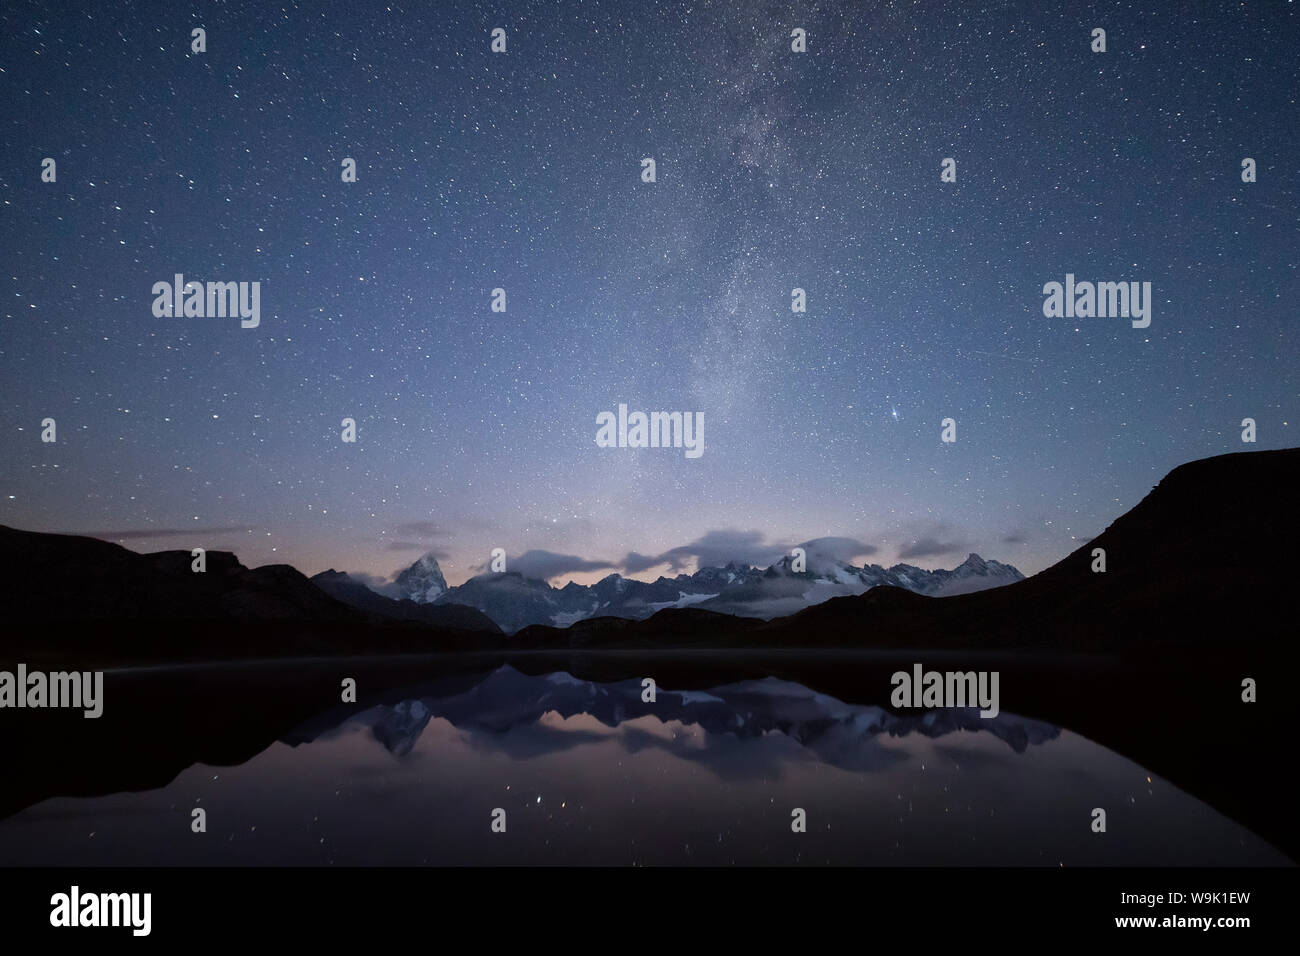 Sternenklarem Sommerhimmel auf fenetre Seen und hohen Gipfeln, Frettchen Tal, Saint Rhemy, Grand St Bernard, Aostatal, Italien, Europa Stockfoto